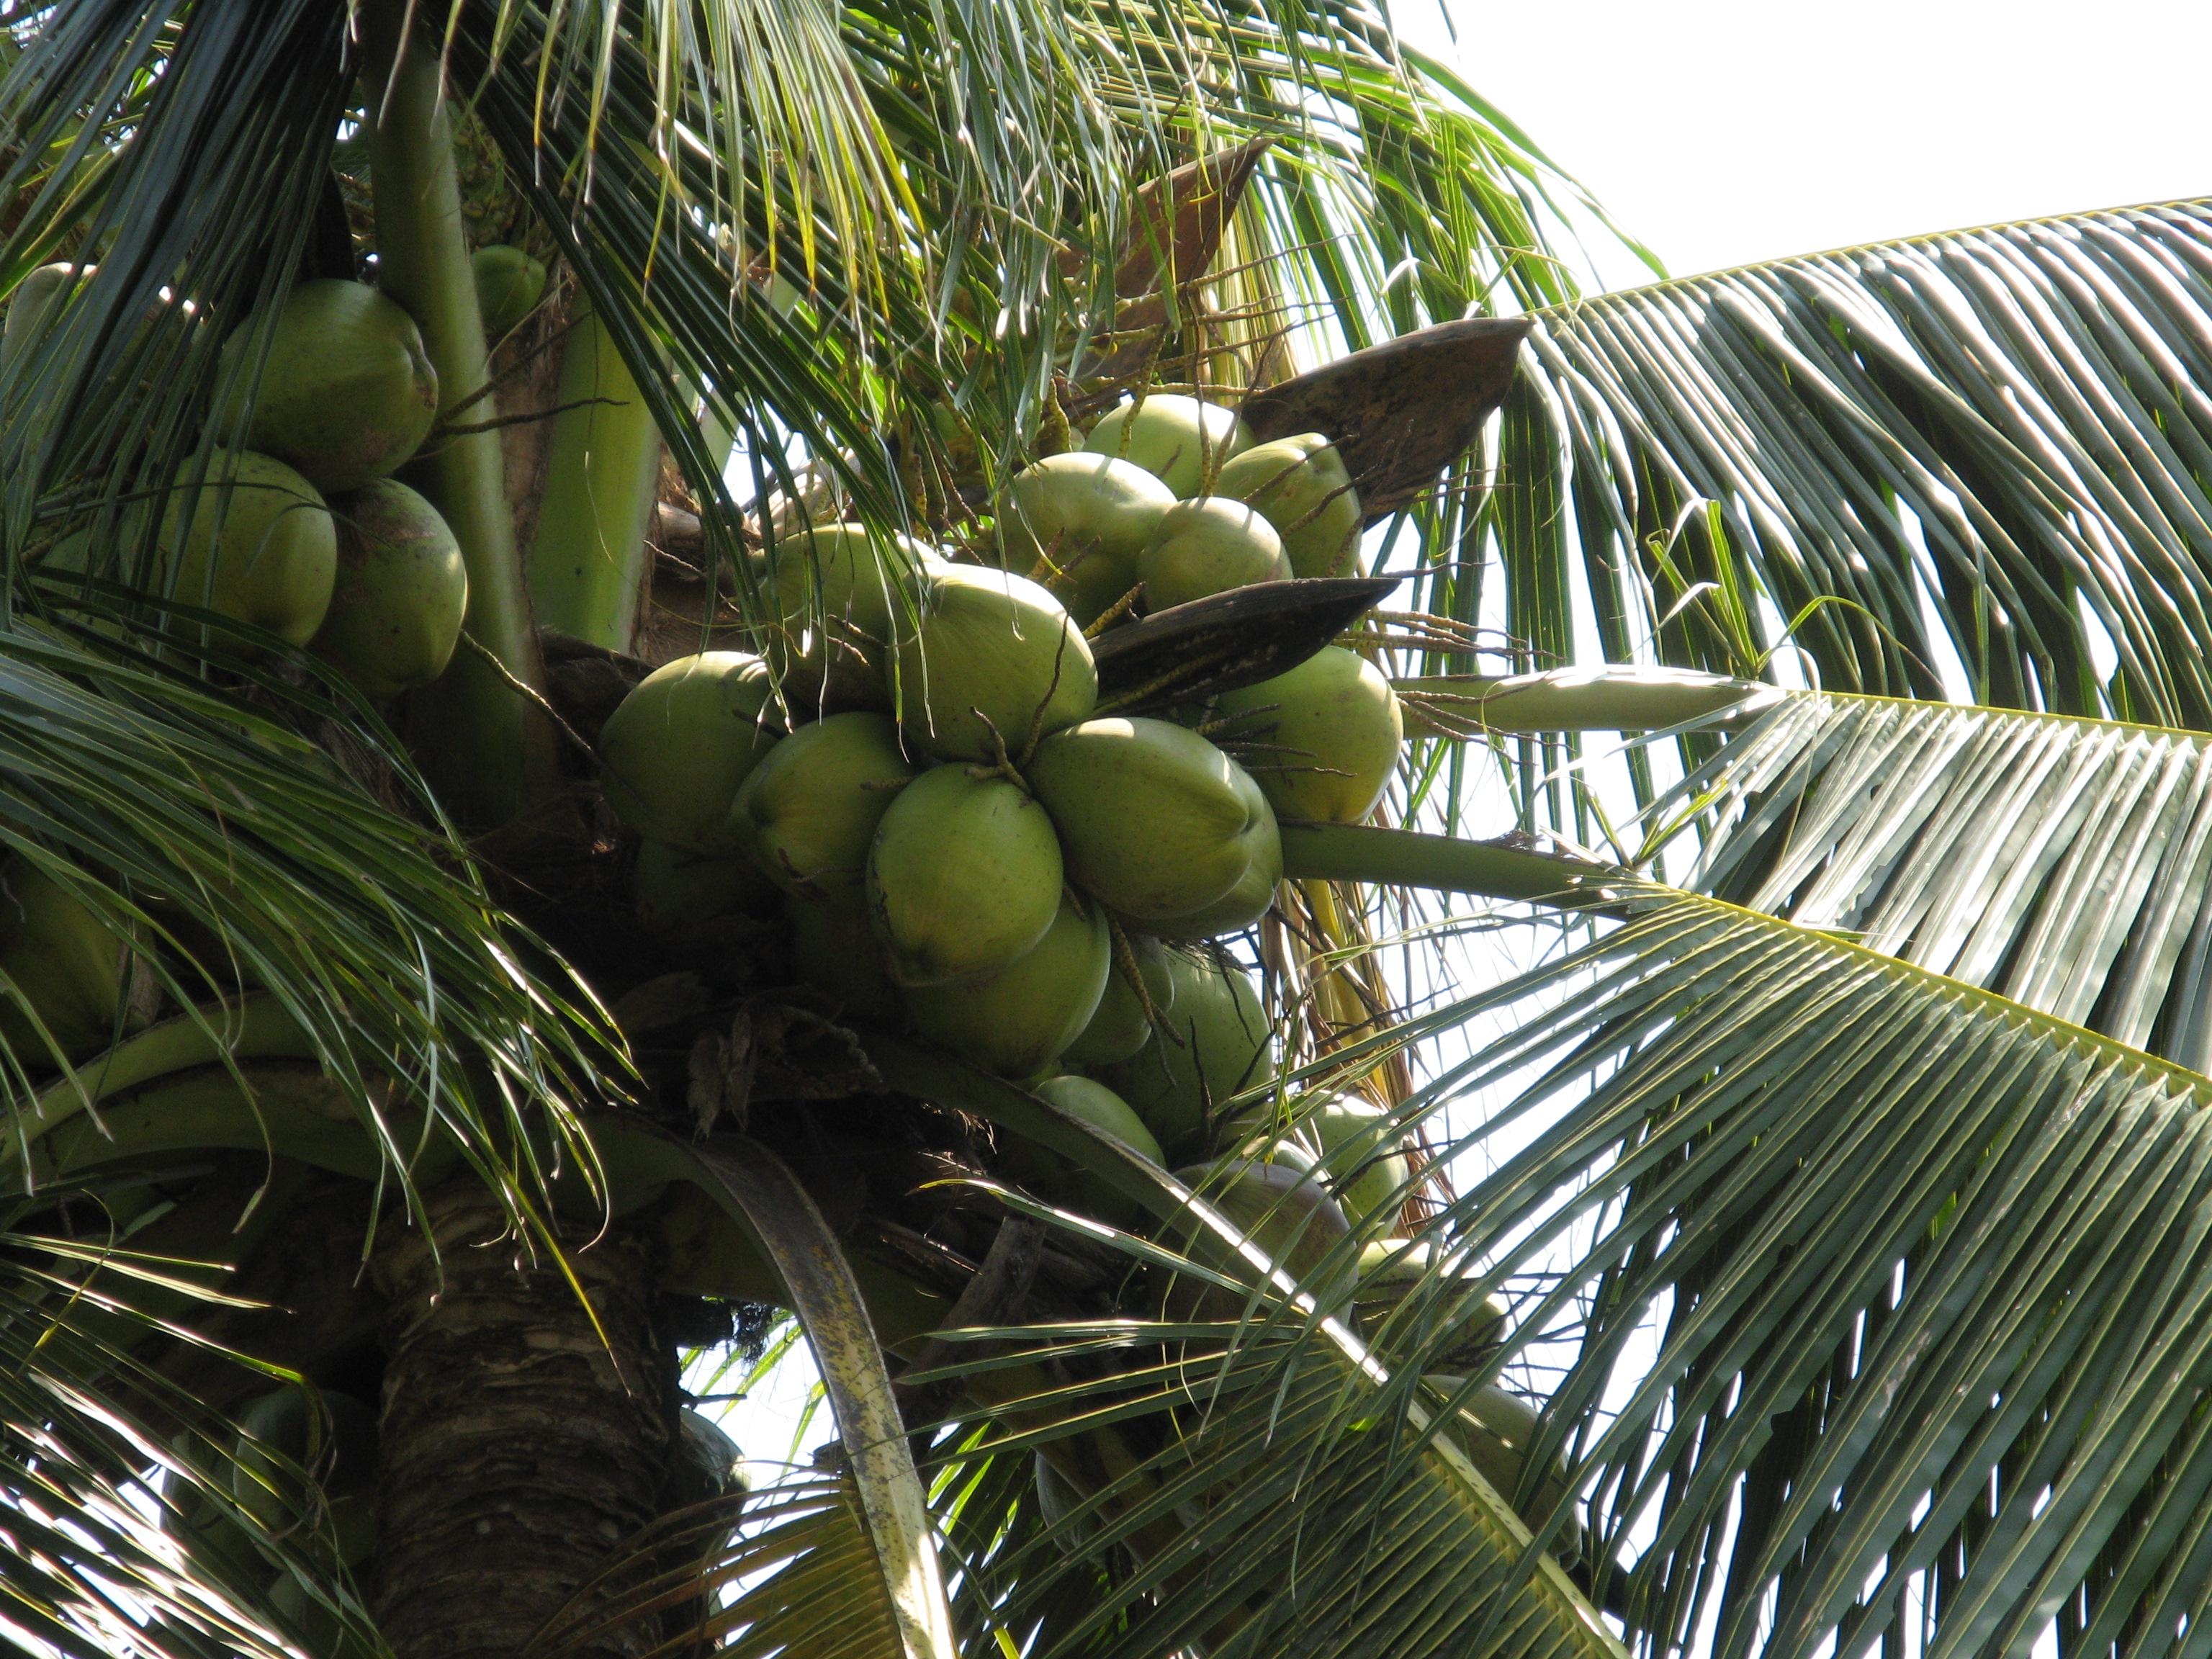 File:Coconut green.JPG - Wikimedia Commons